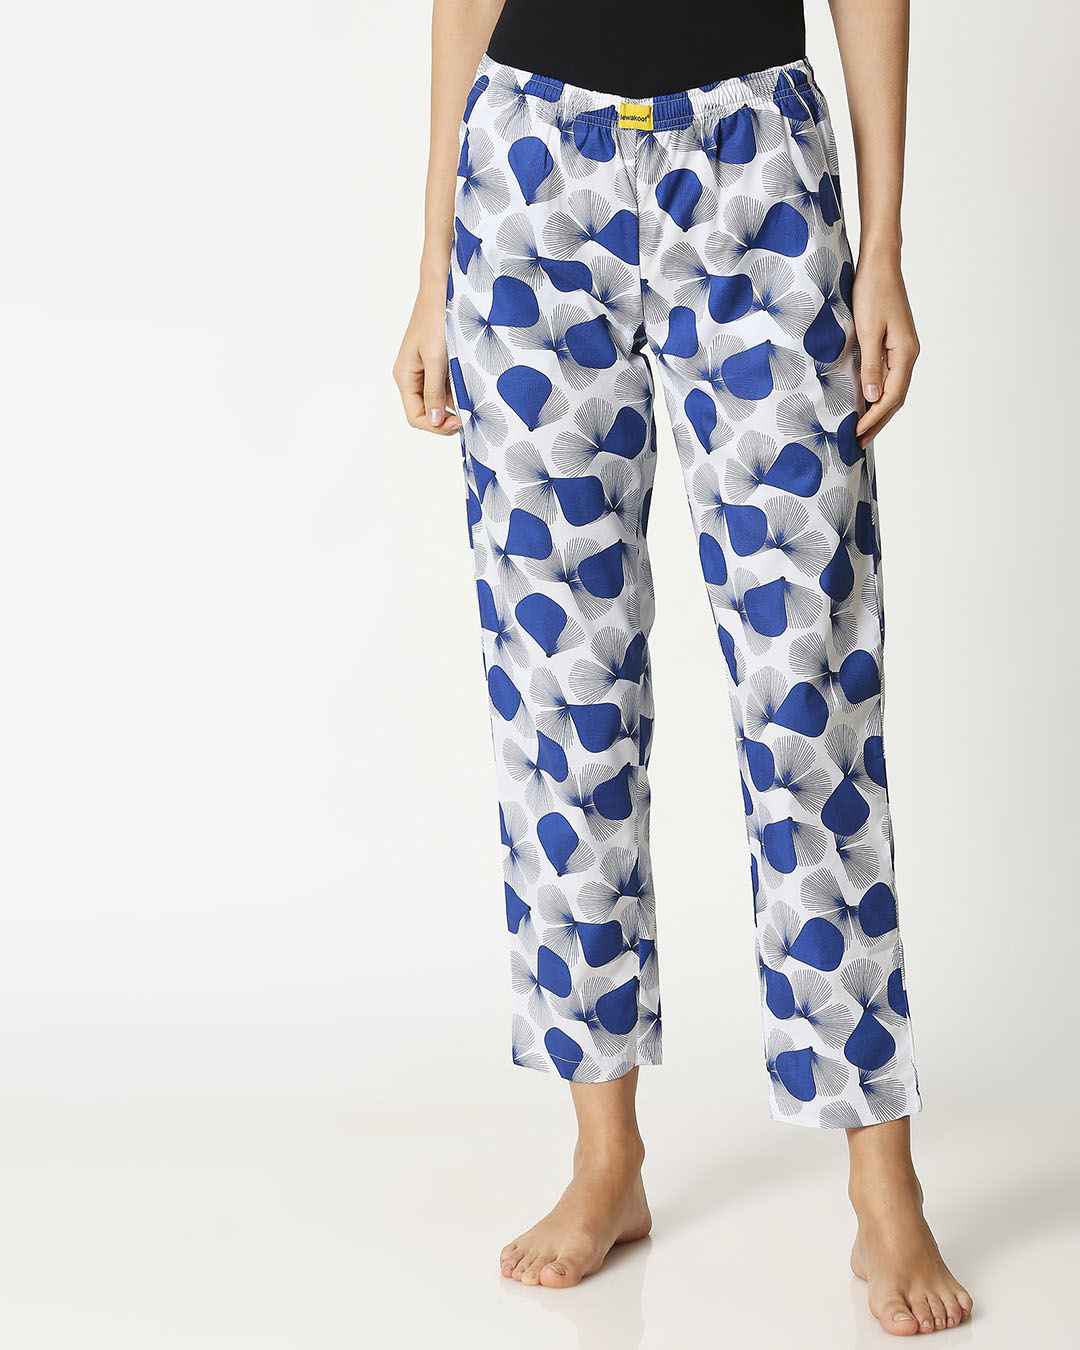 Shop Blue Rays Women's Pyjamas-Back